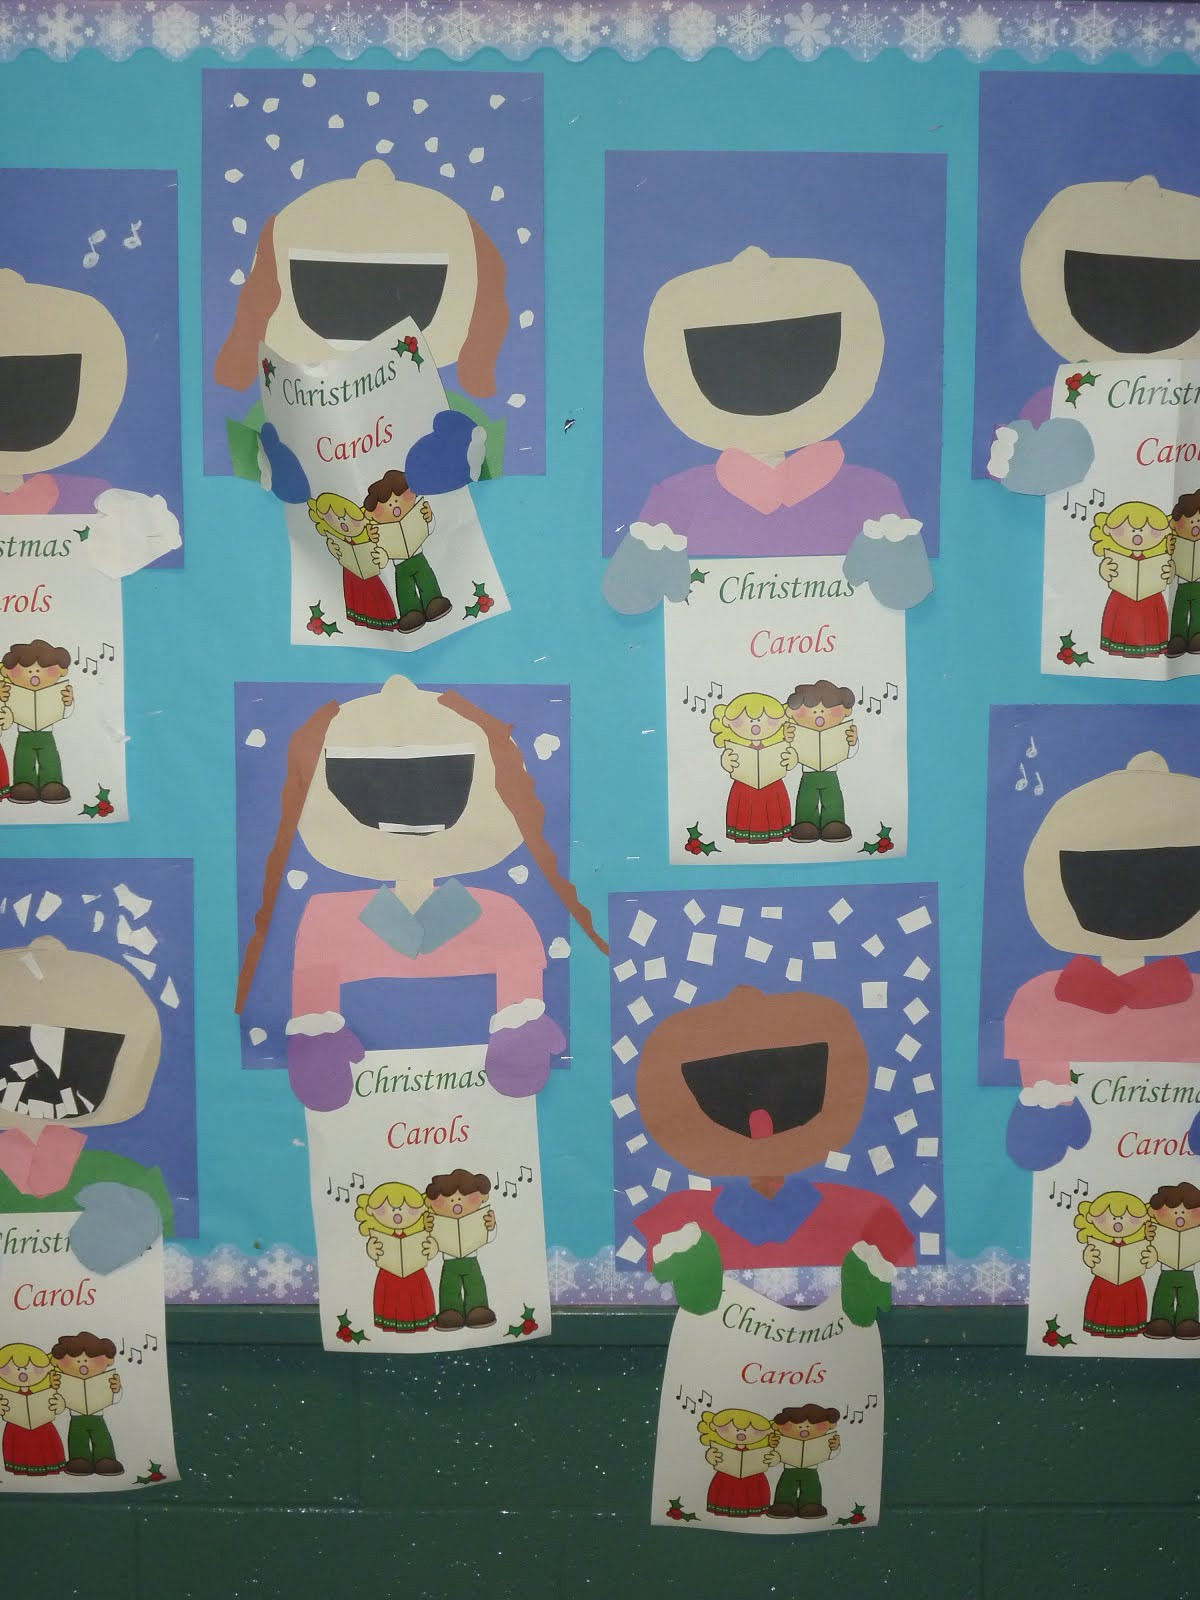 Best ideas about Christmas Art Ideas For Teachers
. Save or Pin Christmas Caroler Art Elementary AMC Now.